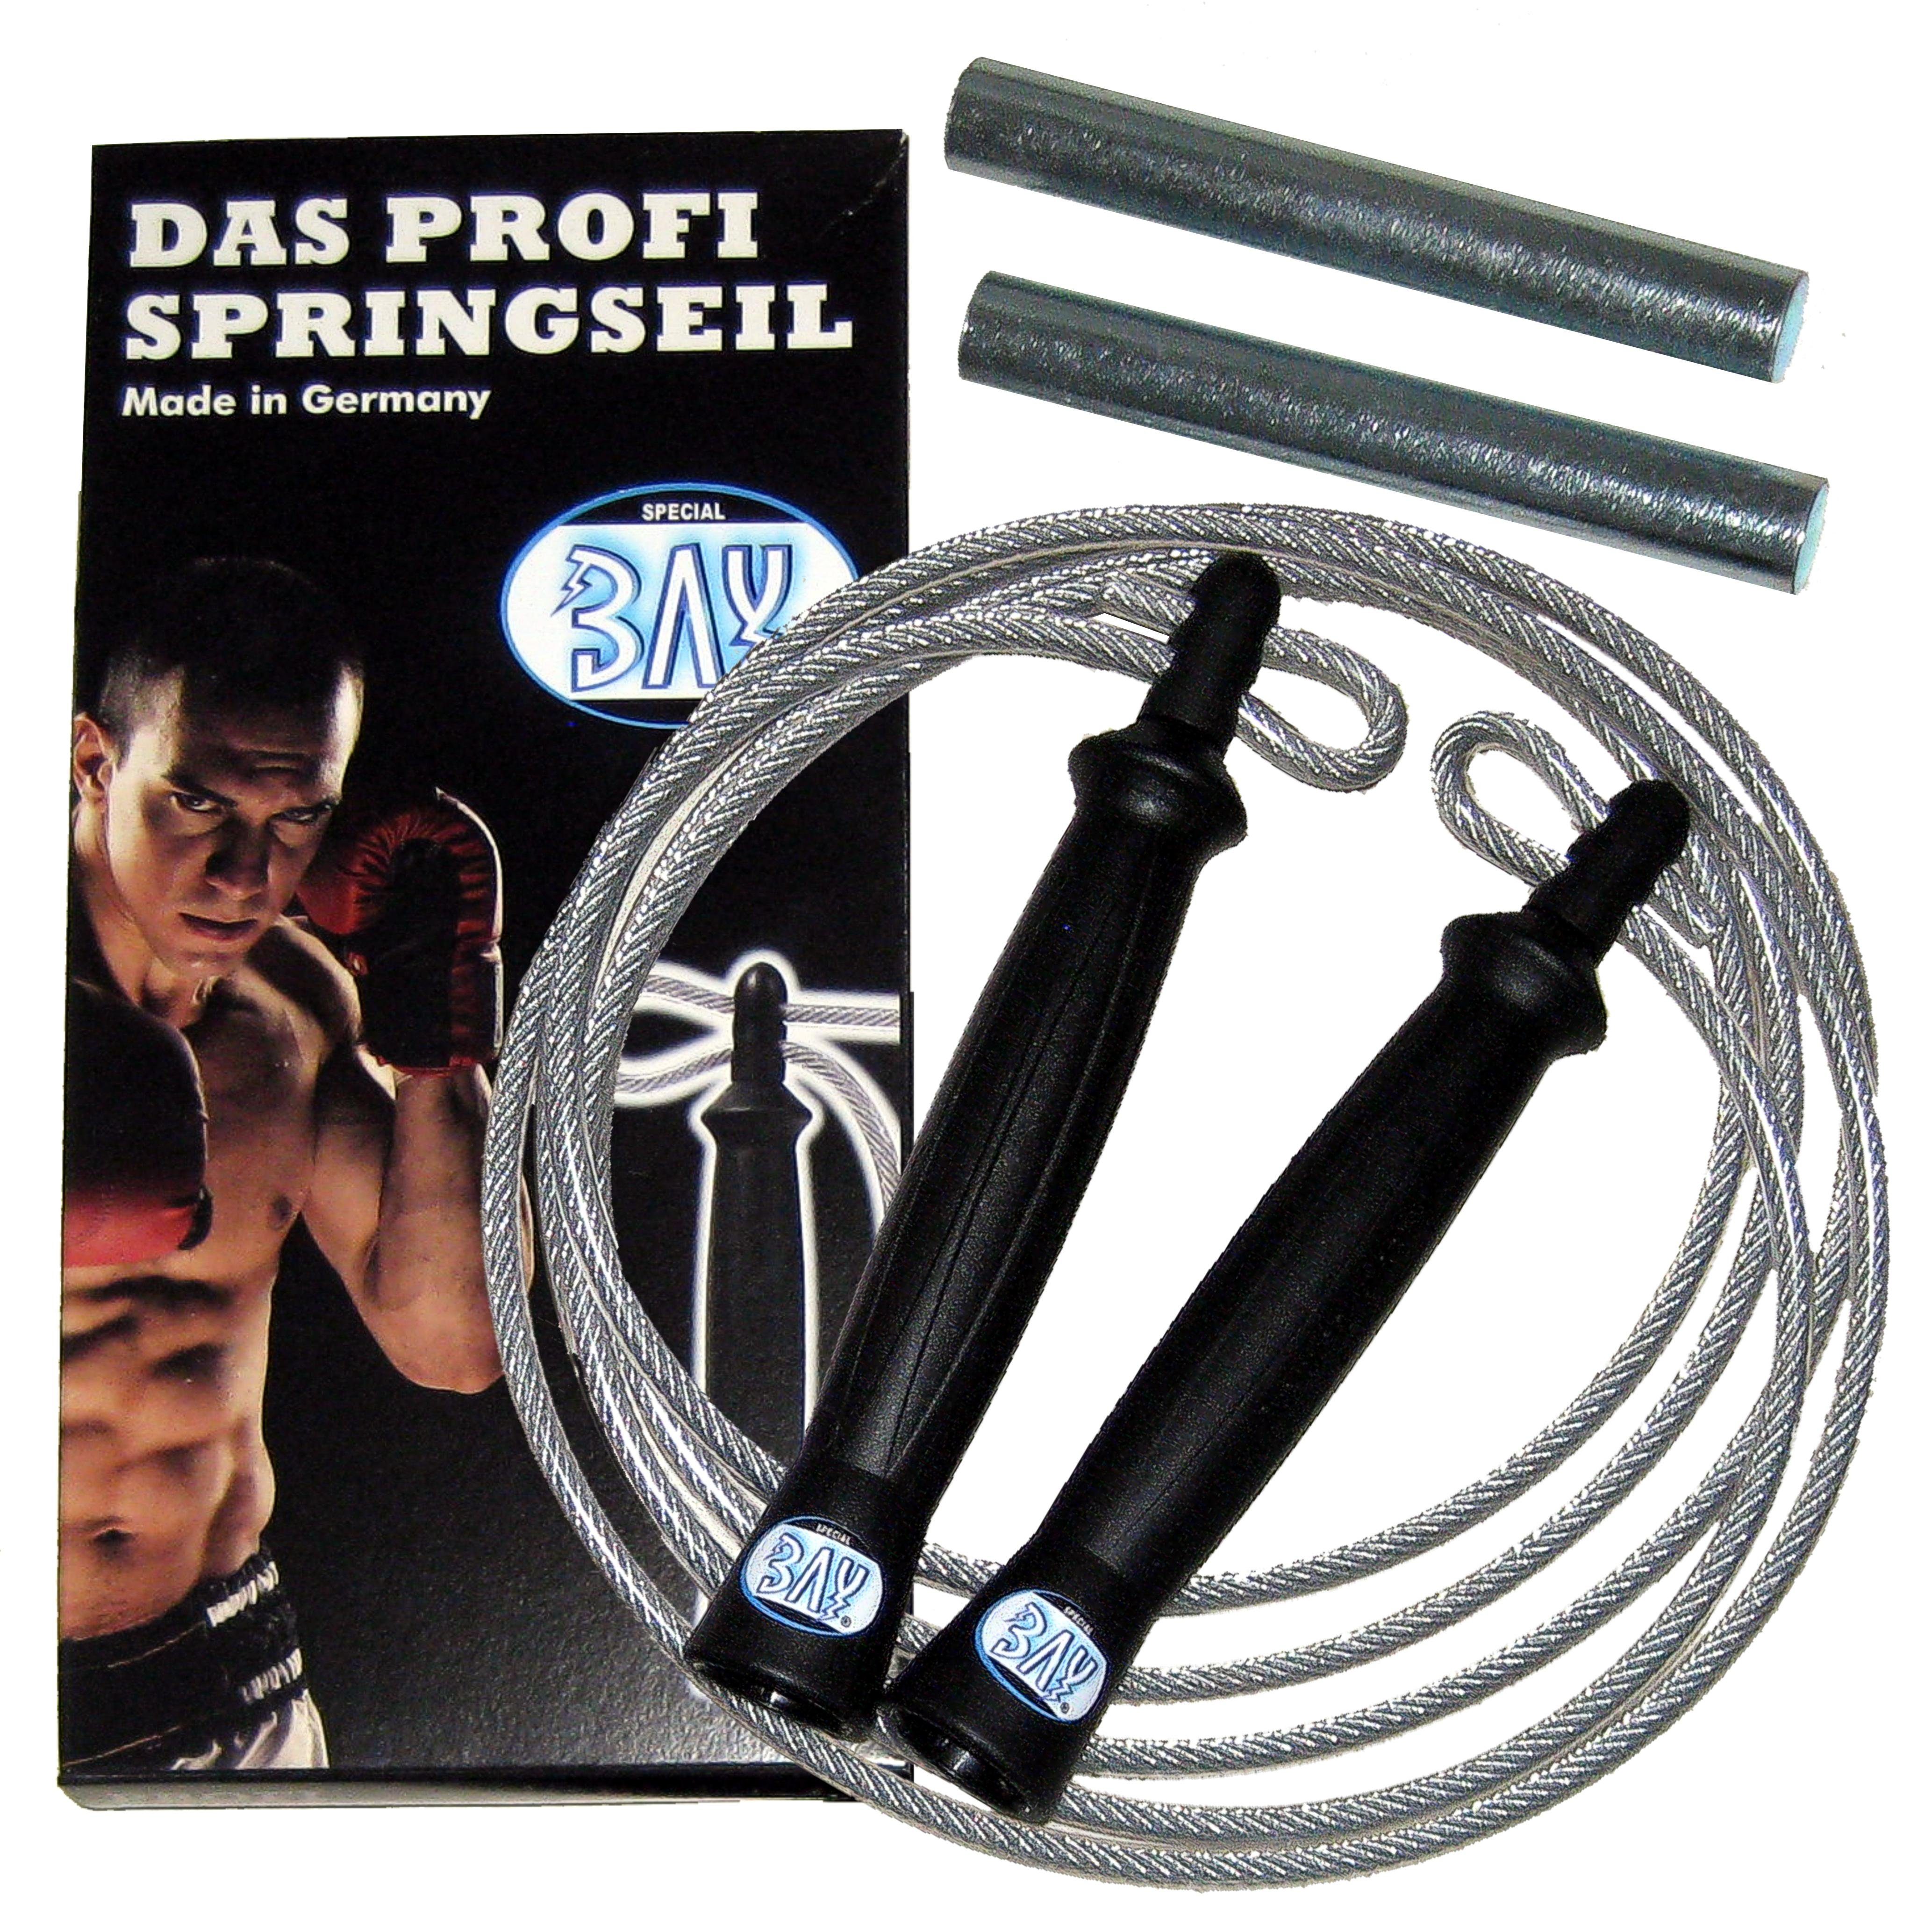 BAY-Sports Springseil Made in Germany Springseil mit Gewichte Delux 280 | Springseile